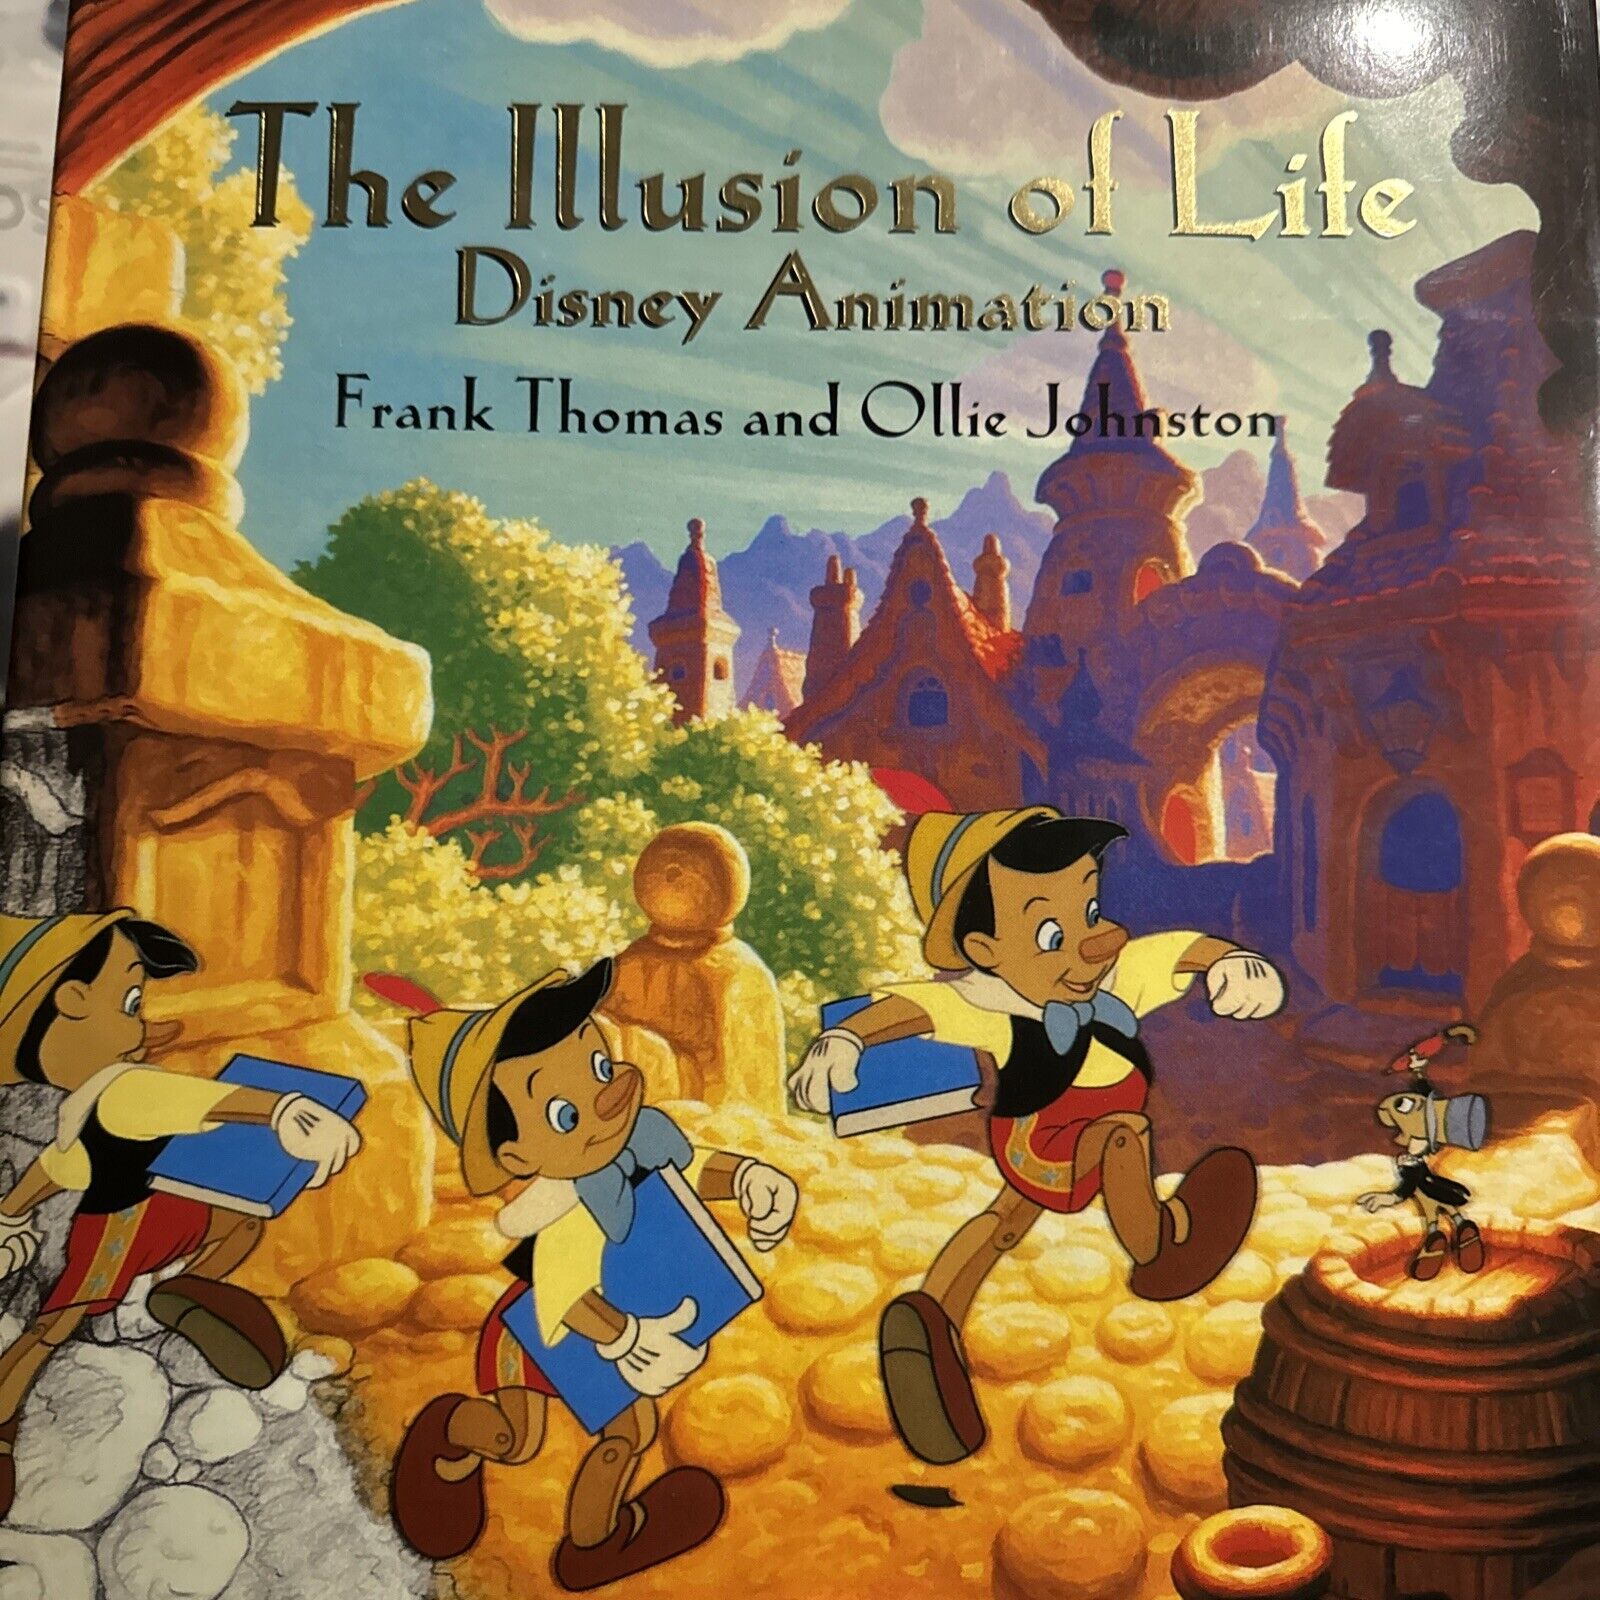 The Illusion of Life: Disney Animation Ollie Johnston and Frank Thomas